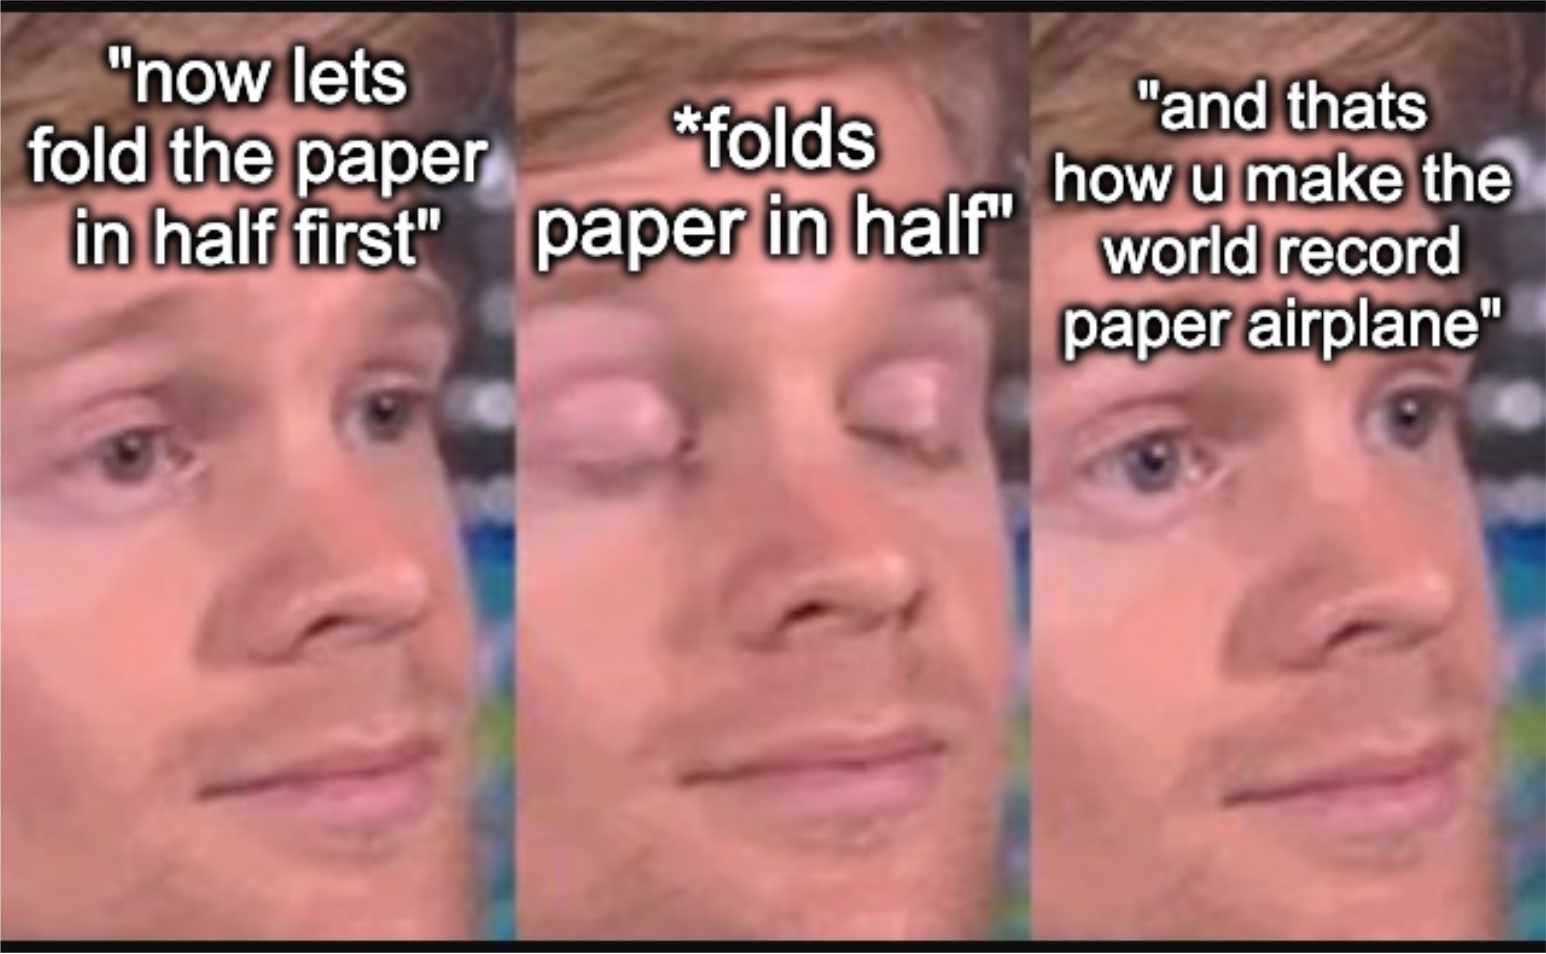 origami tutorials be like - meme